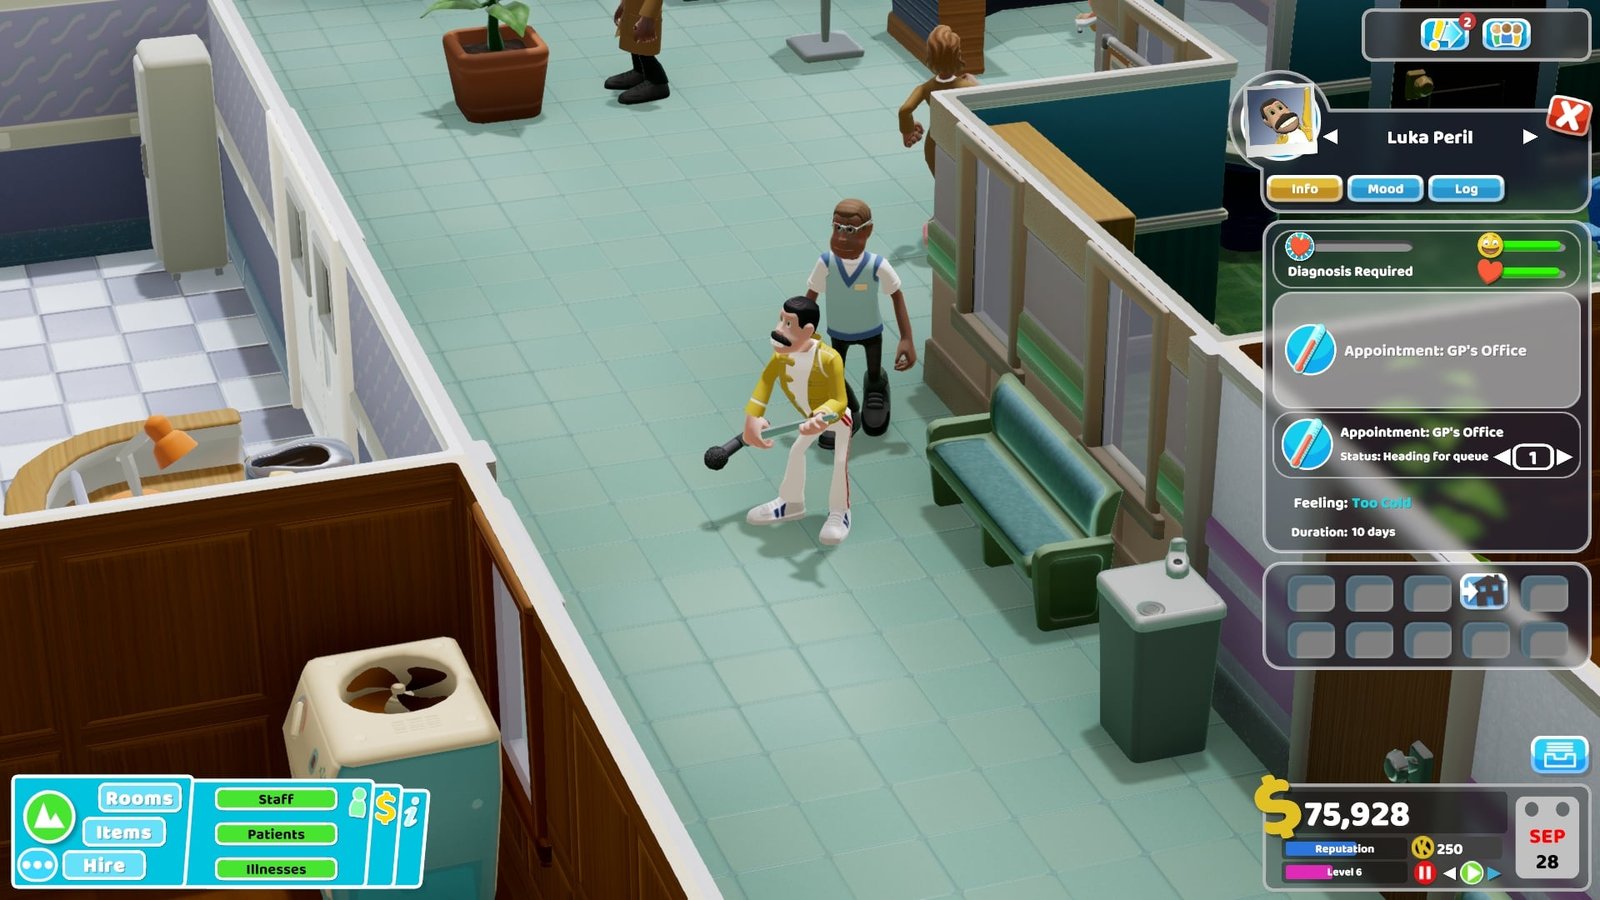 Imagem do jogo Two Point Hospital